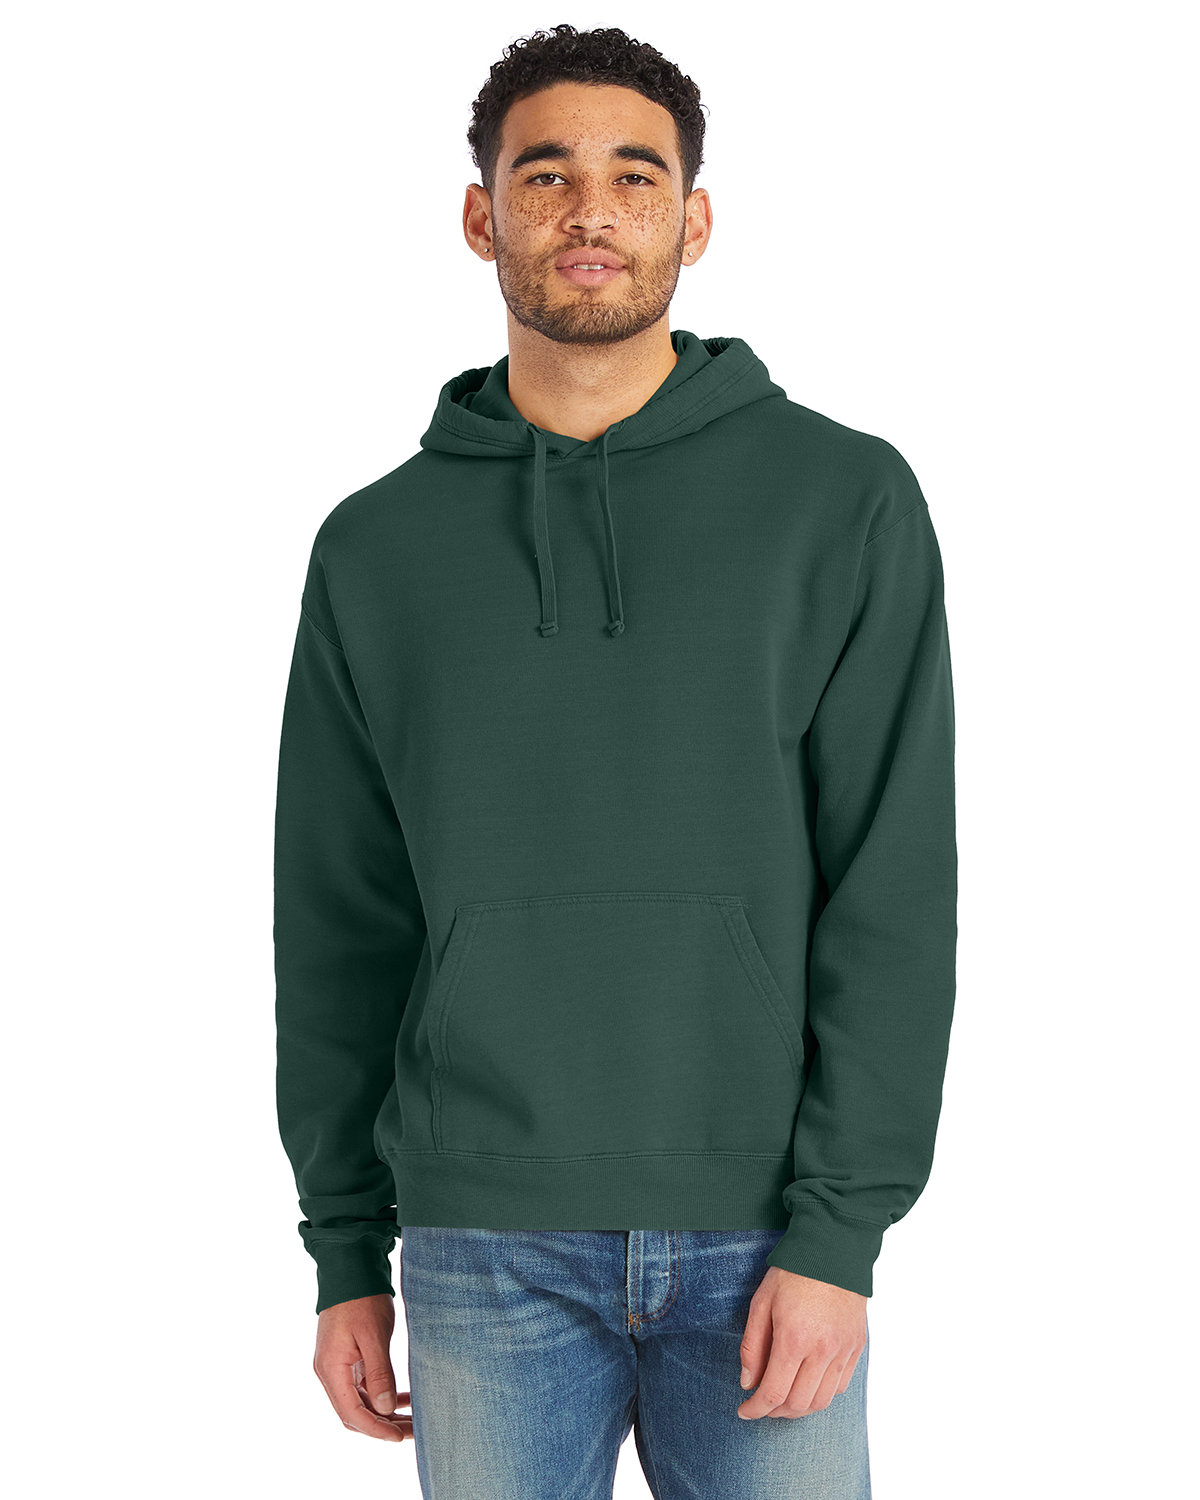 ComfortWash by Hanes Unisex Pullover Hooded Sweatshirt FIELD GREEN 